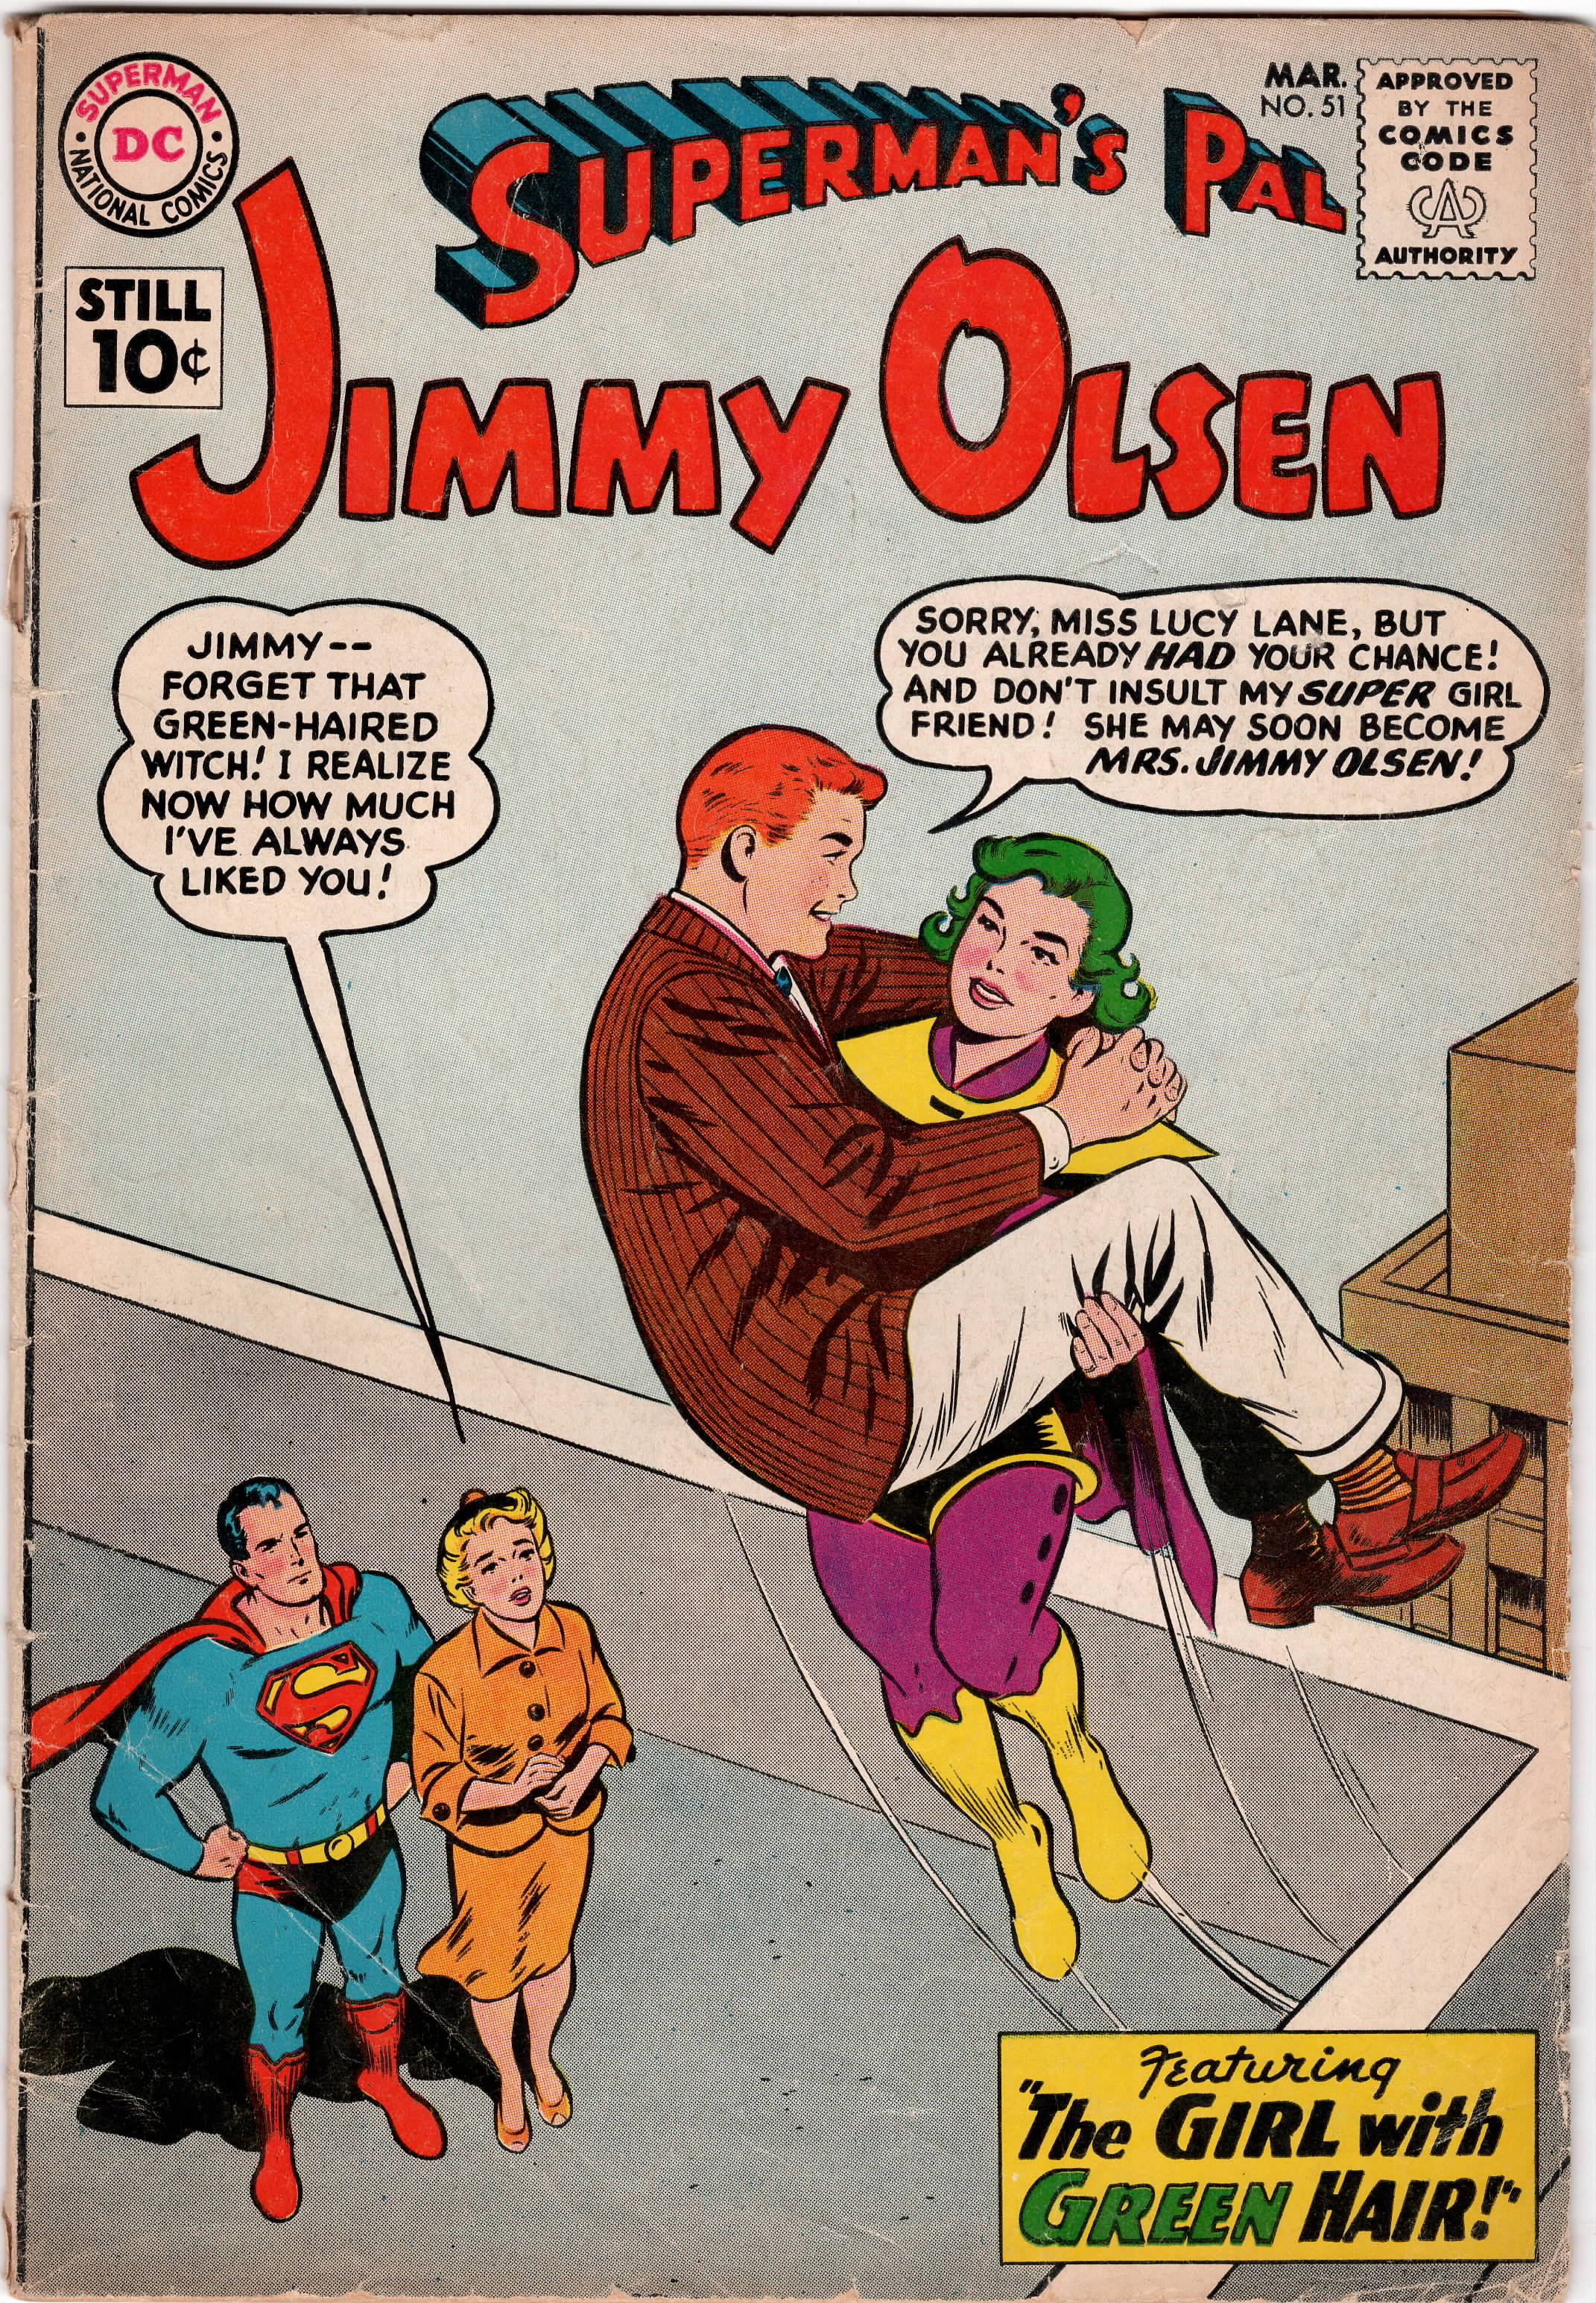 Superman's Pal Jimmy Olsen #051